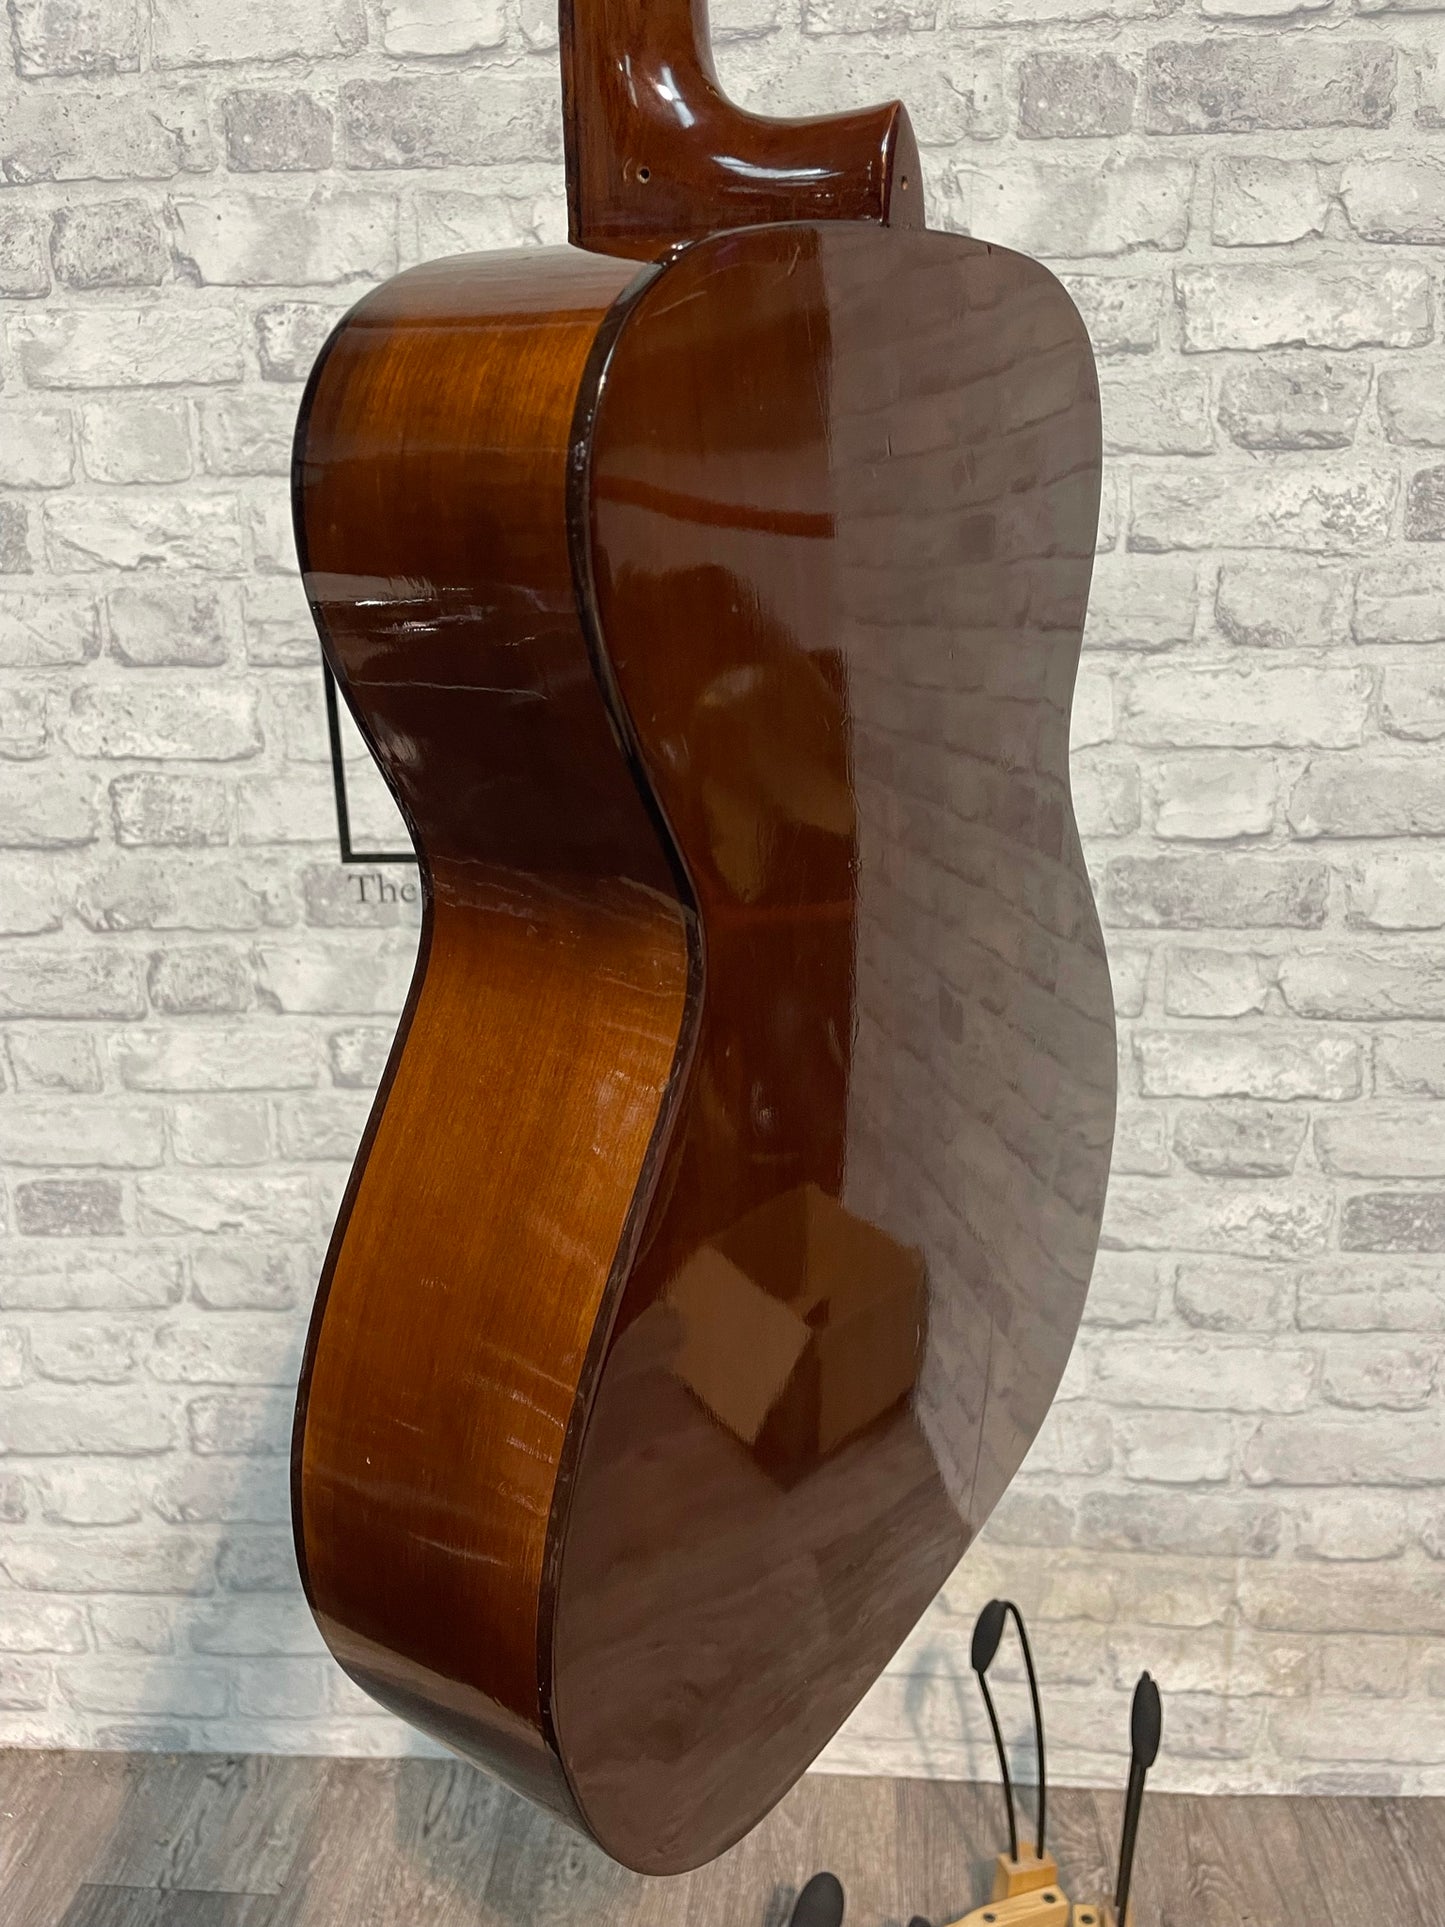 Kimbara Acoustic Guitar with Pick-Up  / 1970's Guitar